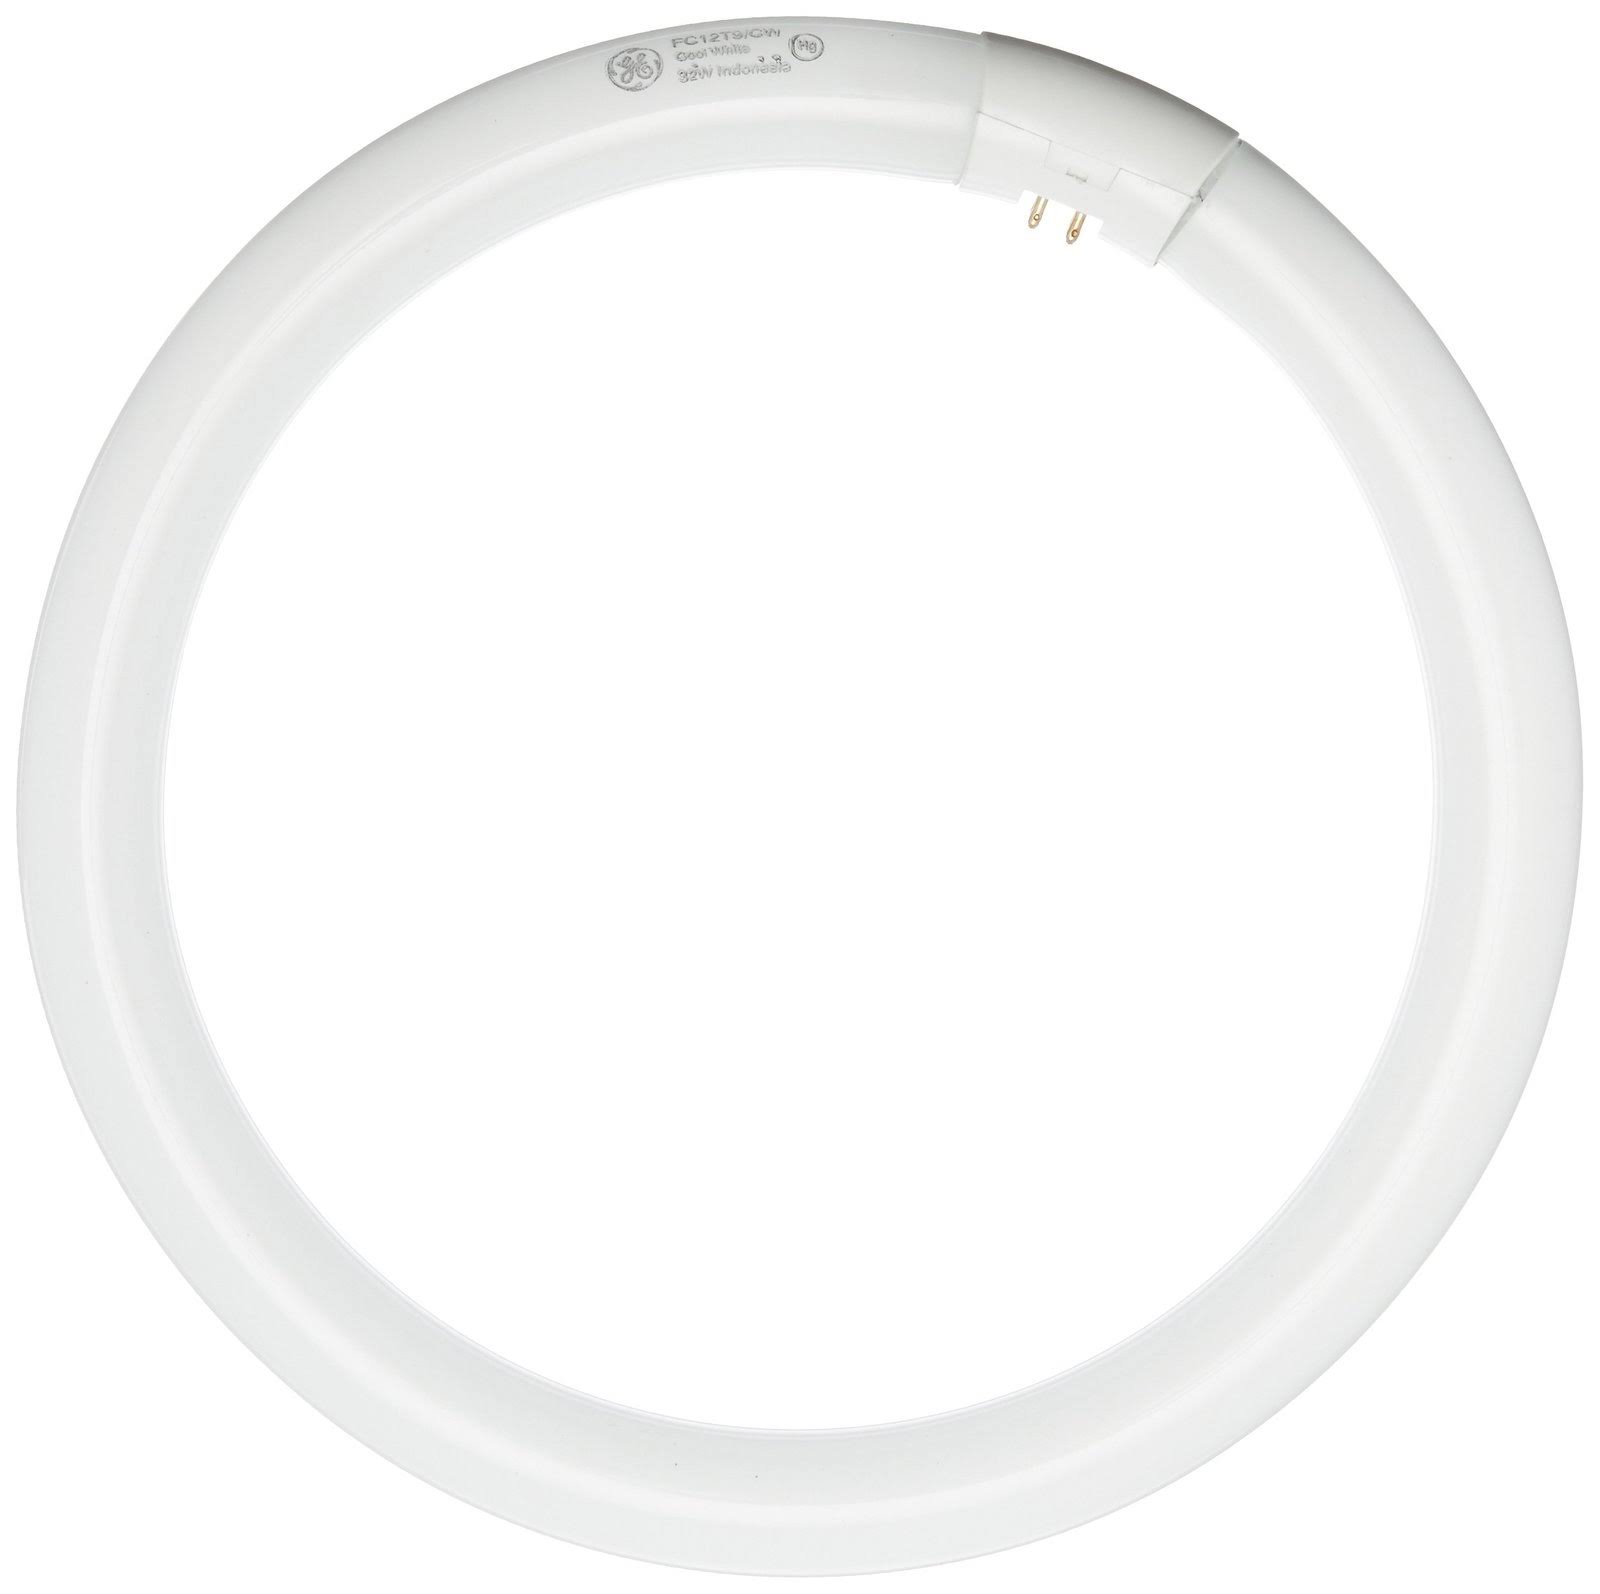 GE Lighting Compact Fluorescent Circline Light Bulb - Cool White, 32W